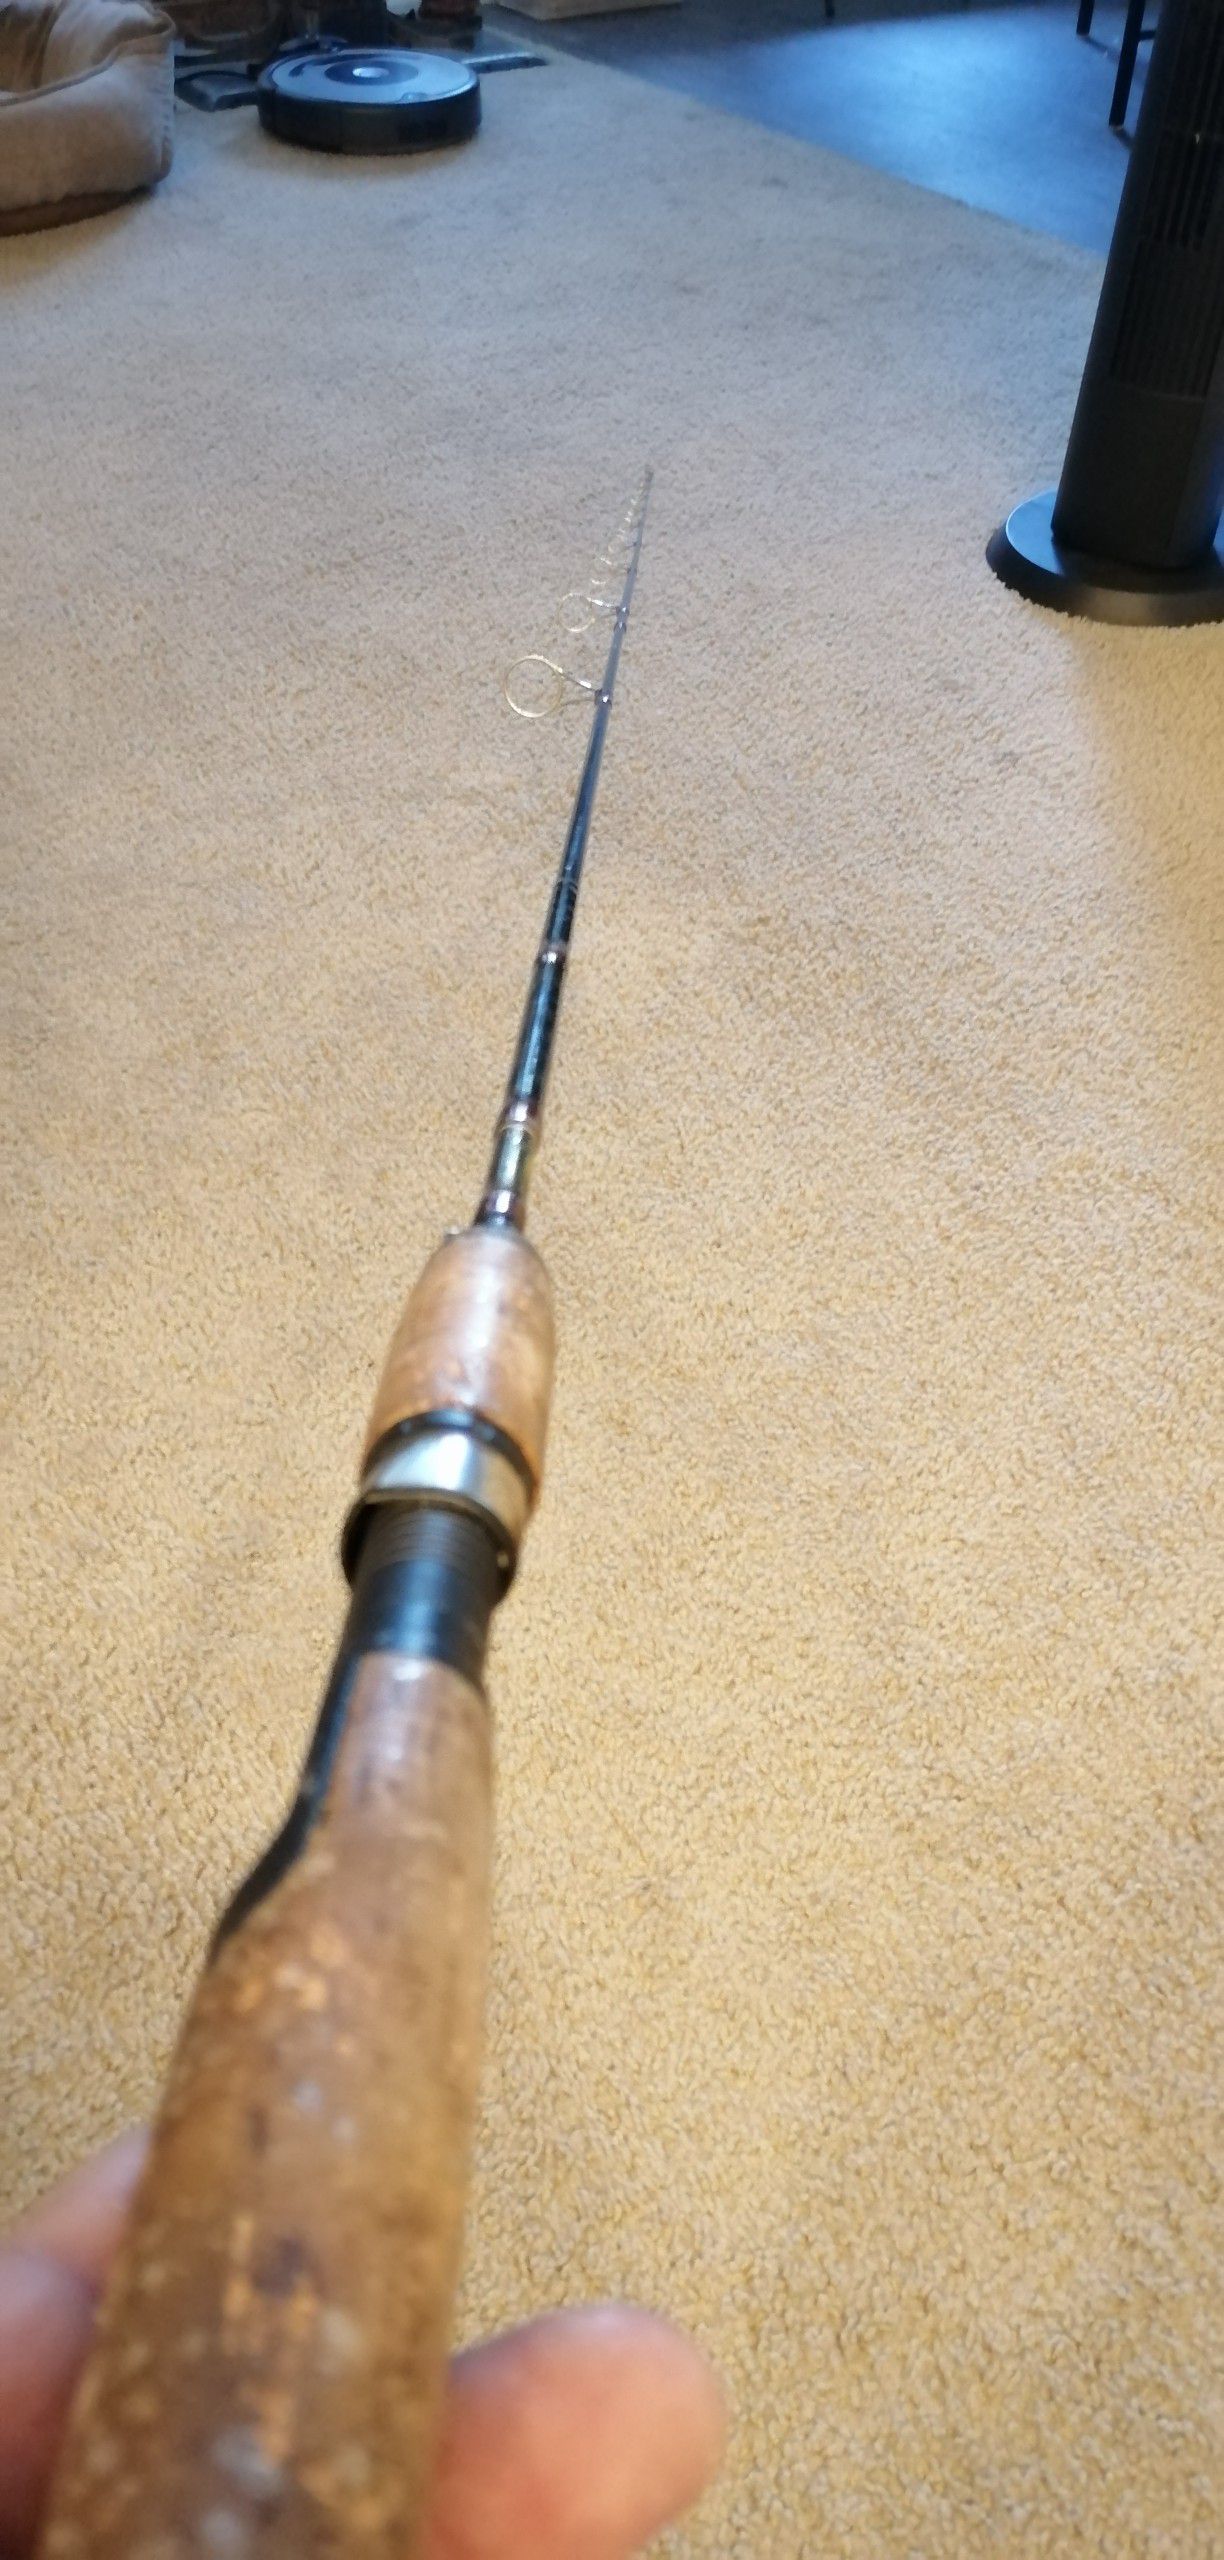 BERKLEY TACTIX ULTRA LIGHT 7'6" 2 PIECE TROUT ROD ul bass bluegill perch freshwater spinning fishing pole